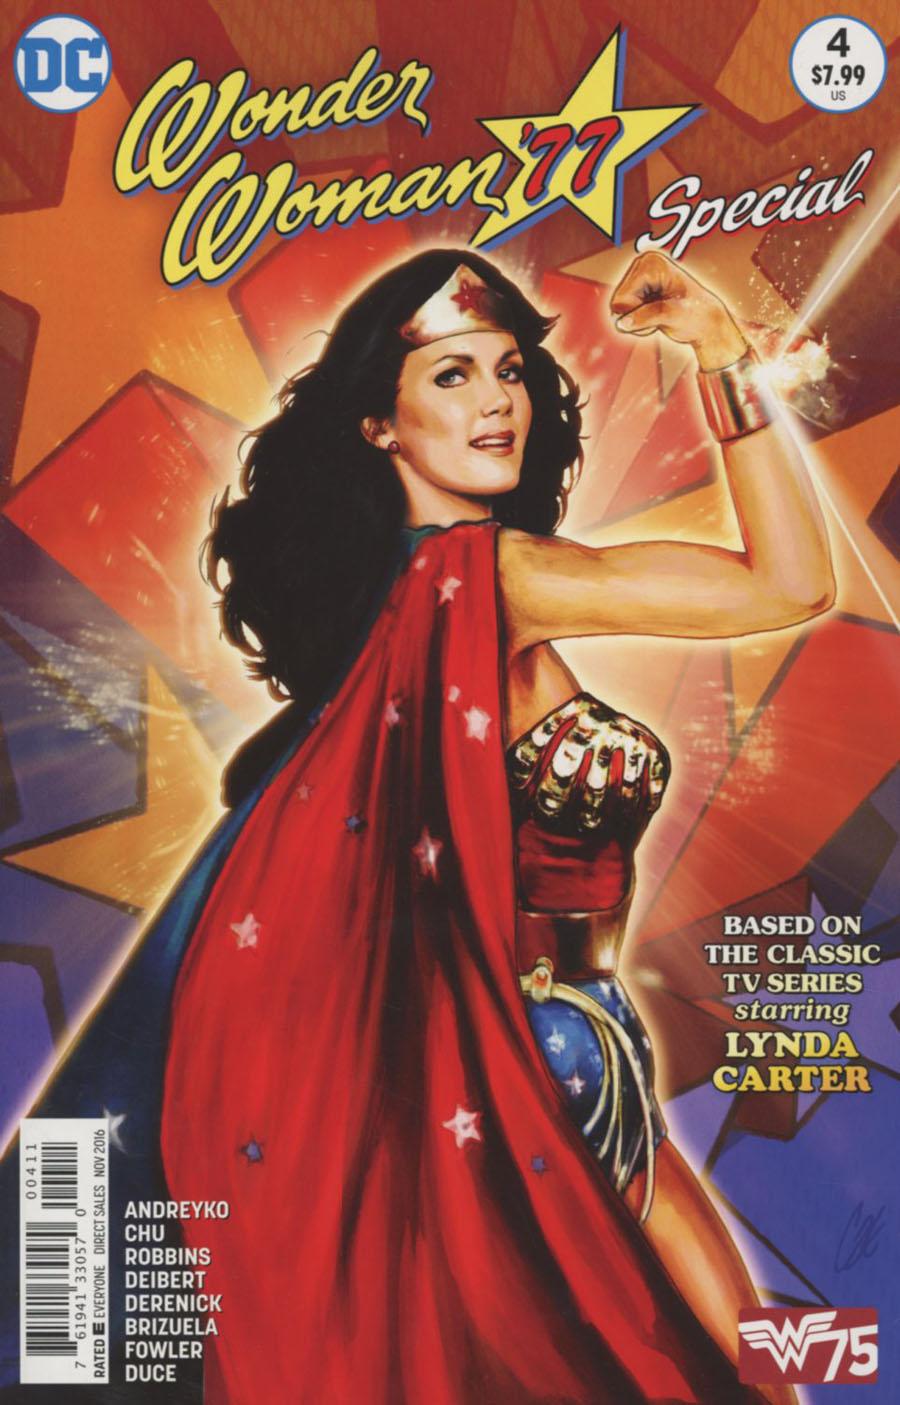 Wonder Woman 77 Special Vol. 1 #4